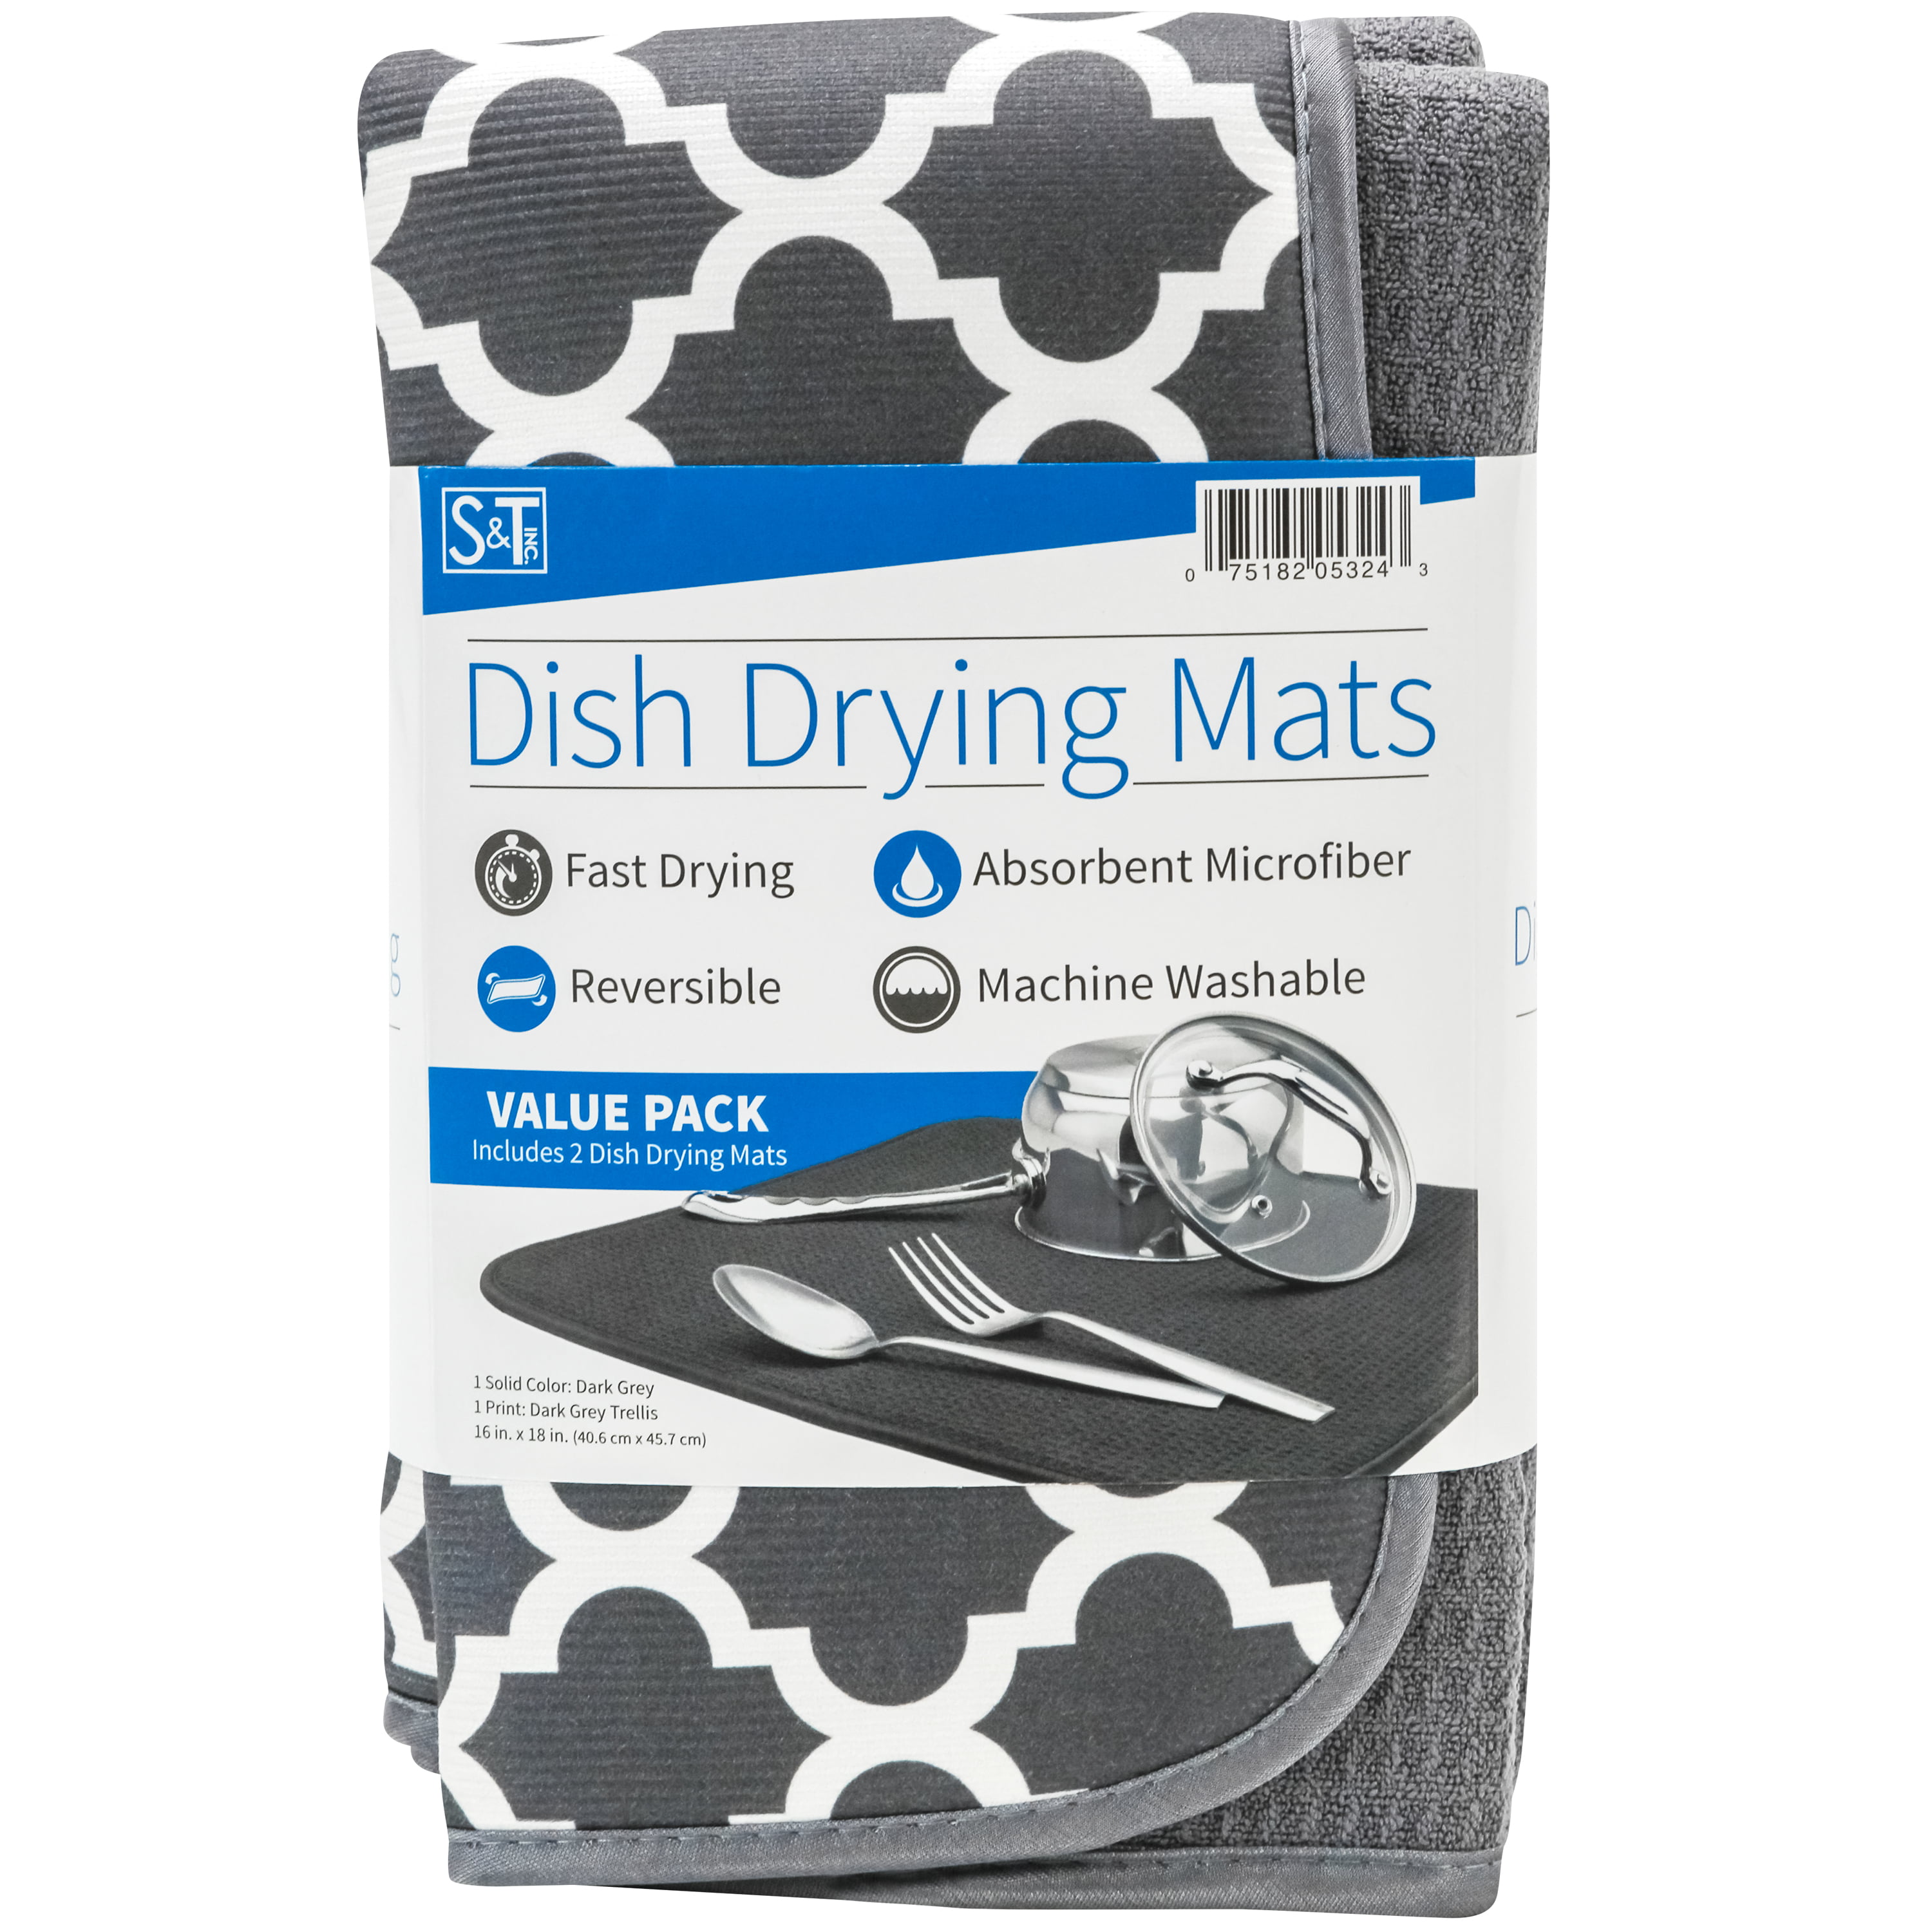 Norpro Microfiber Dish Drying Mat 18 X 16 - Spoons N Spice